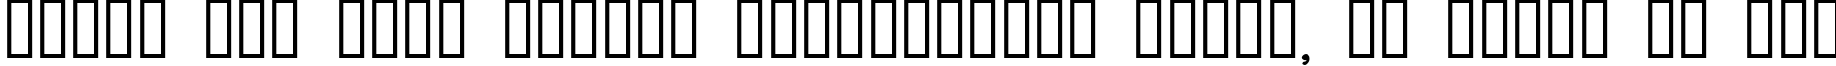 Пример написания шрифтом Curlmudgeon Italic текста на русском